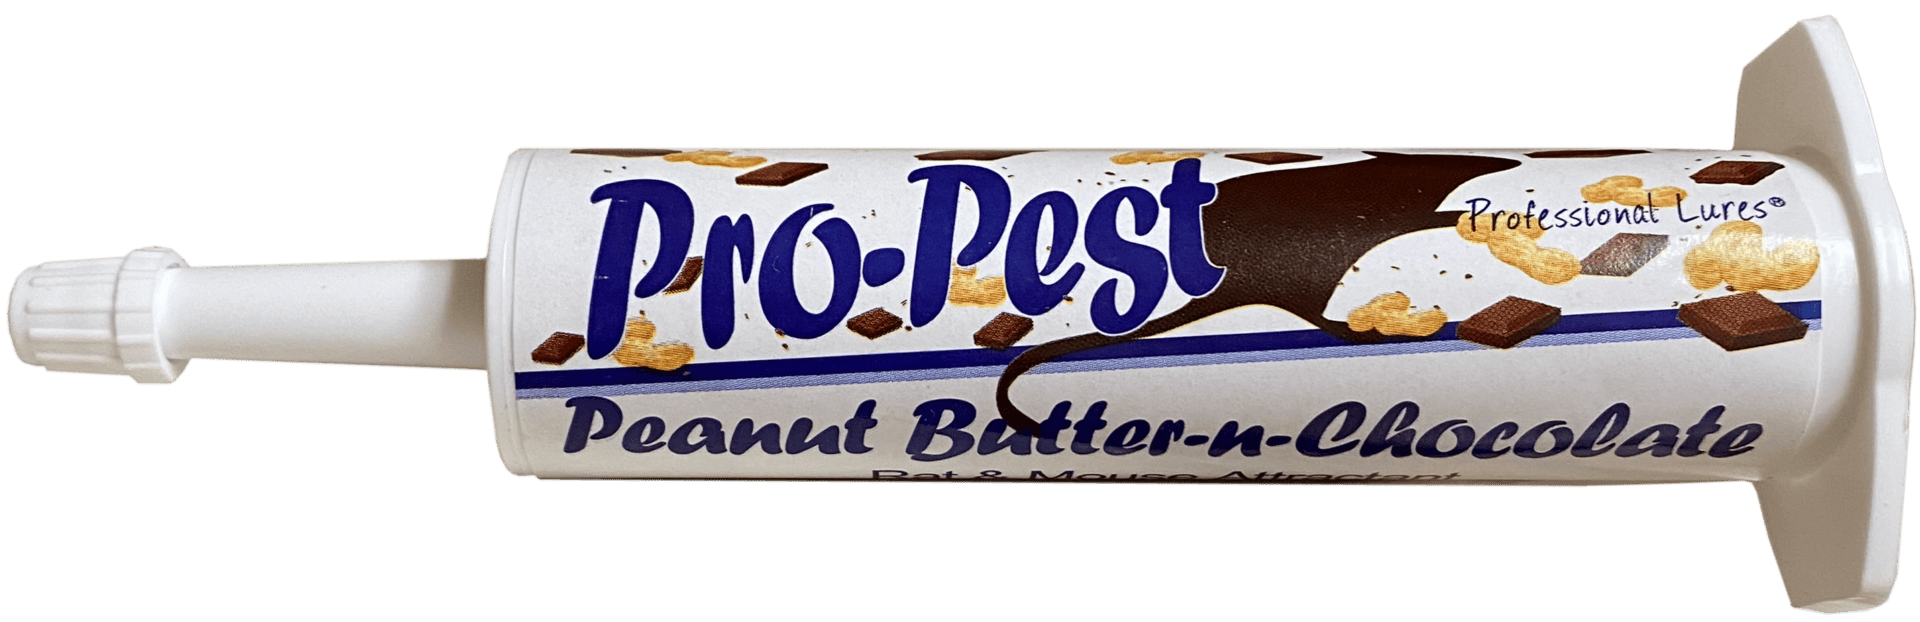 Pro-Pest Chocolate-n-Peanut Butter